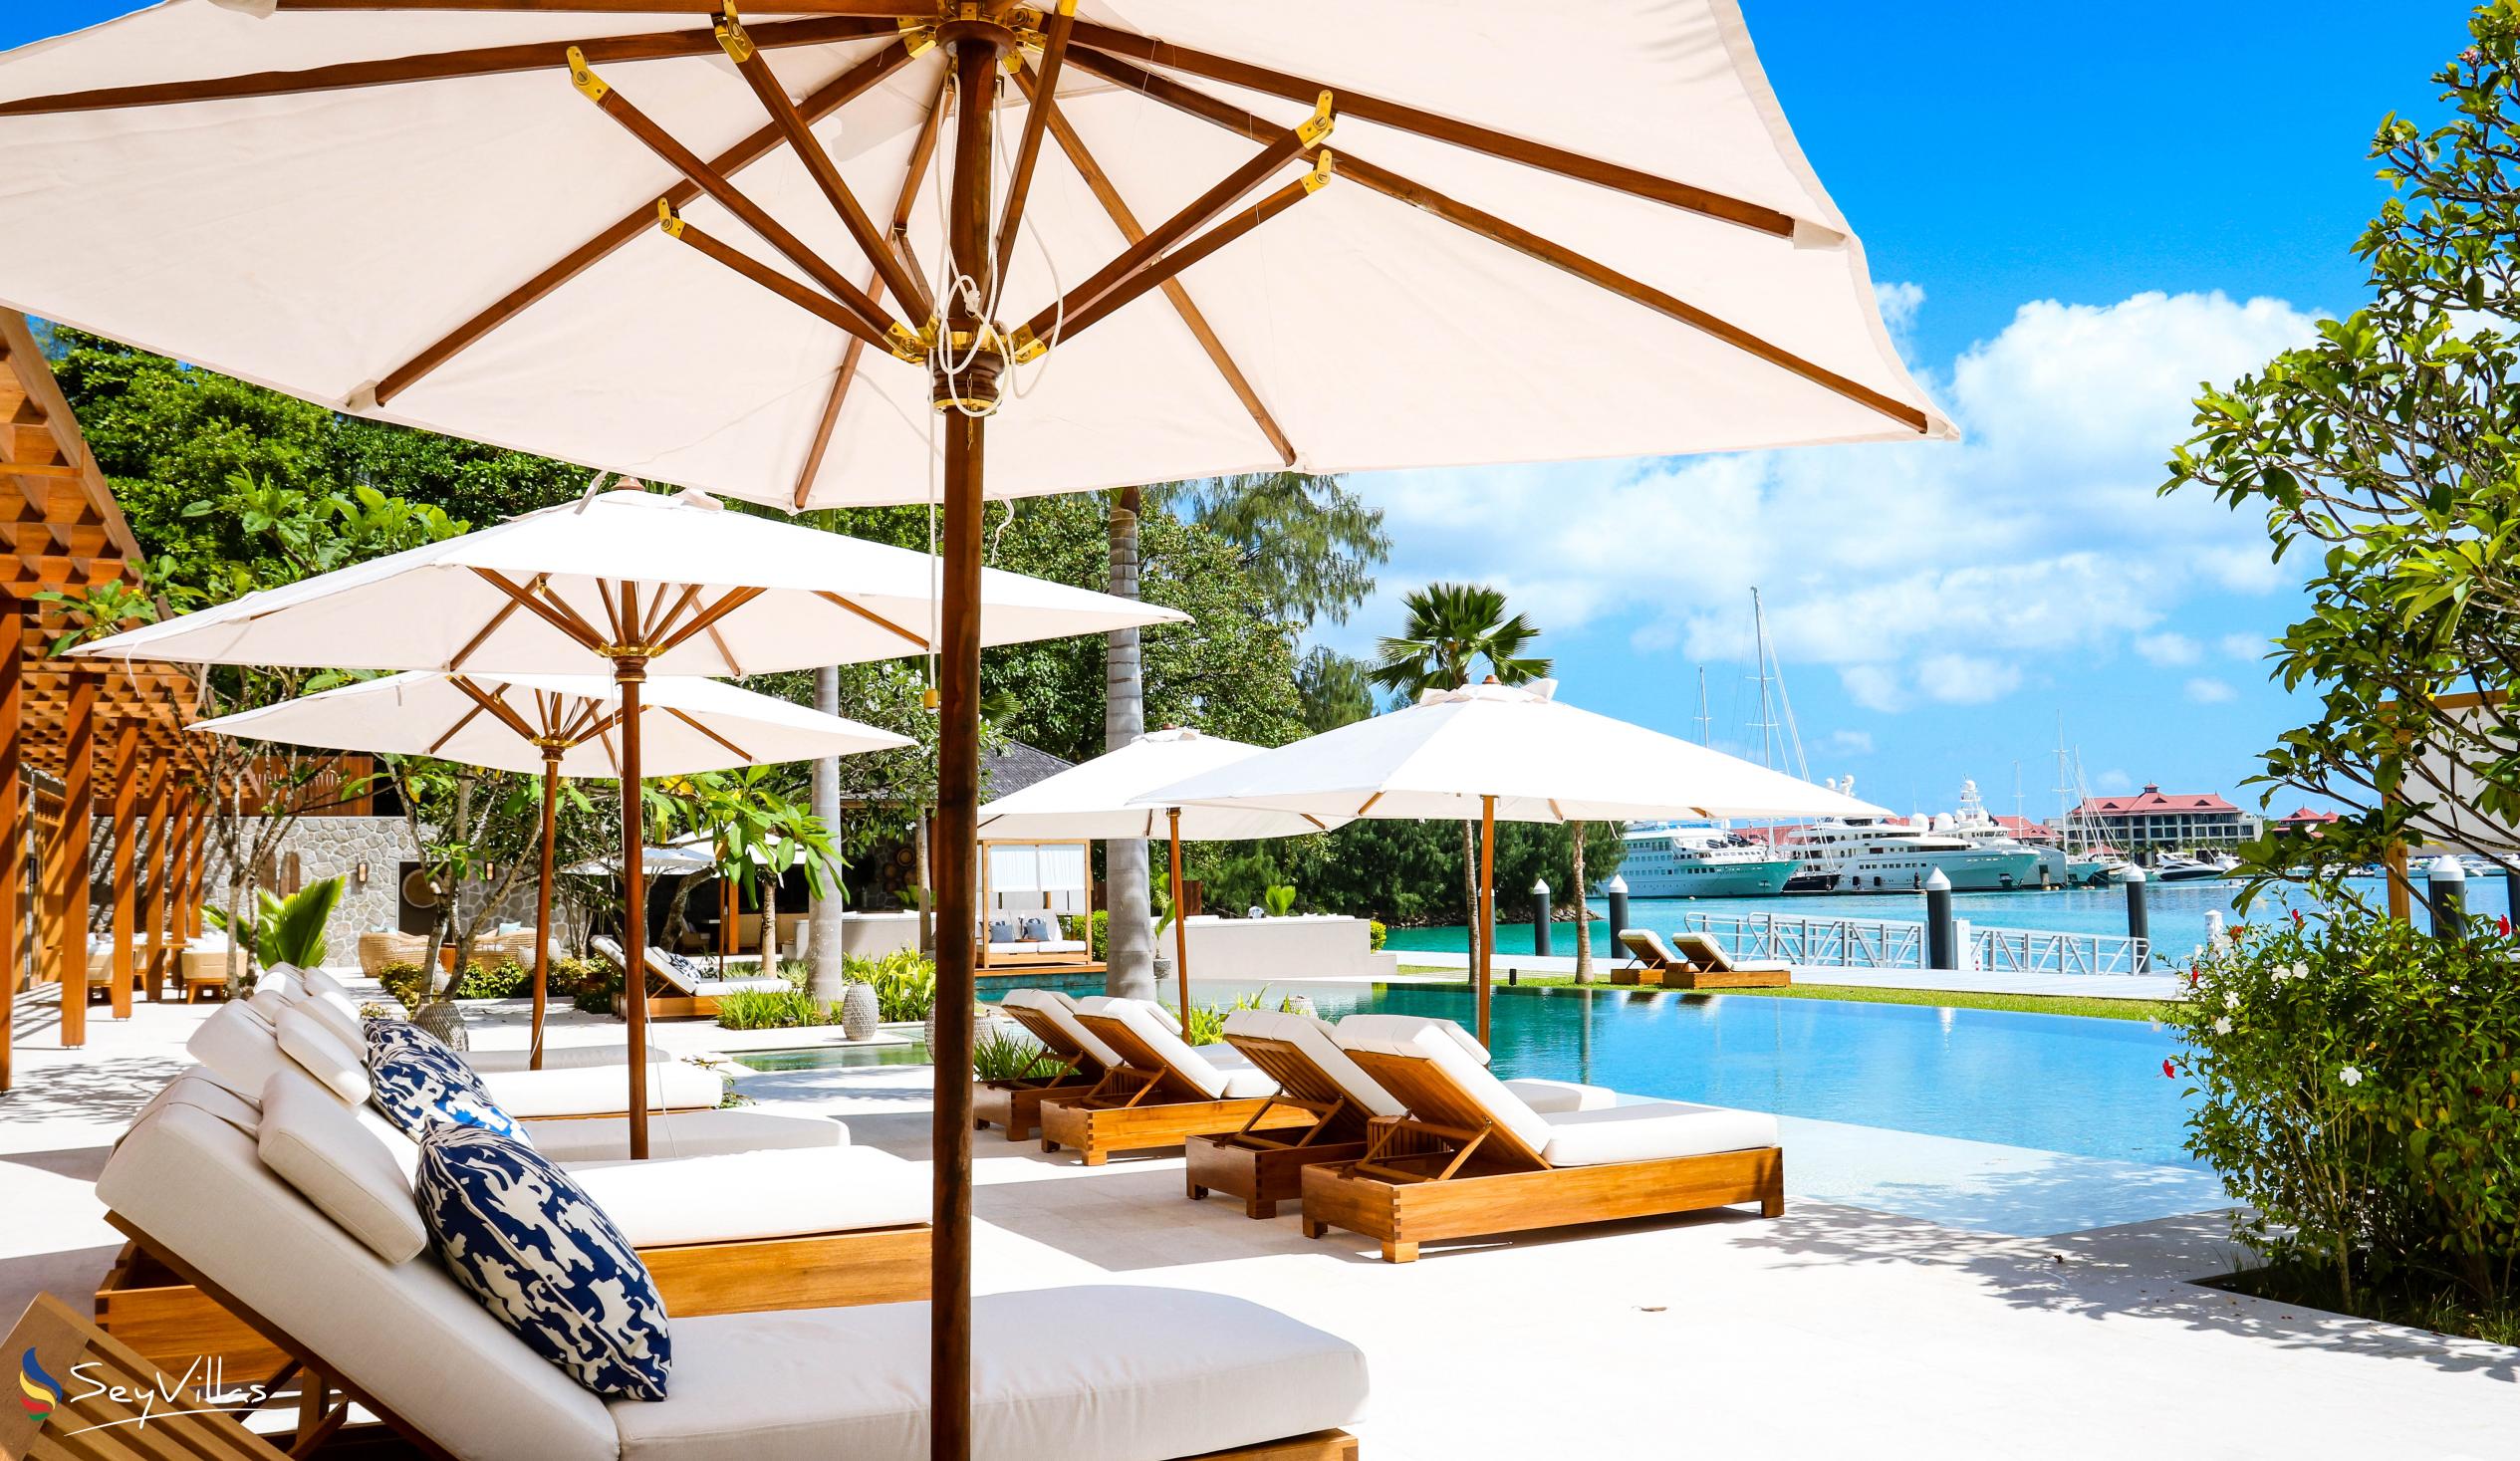 Photo 11: L'Escale Resort, Marina & Spa - Outdoor area - Mahé (Seychelles)